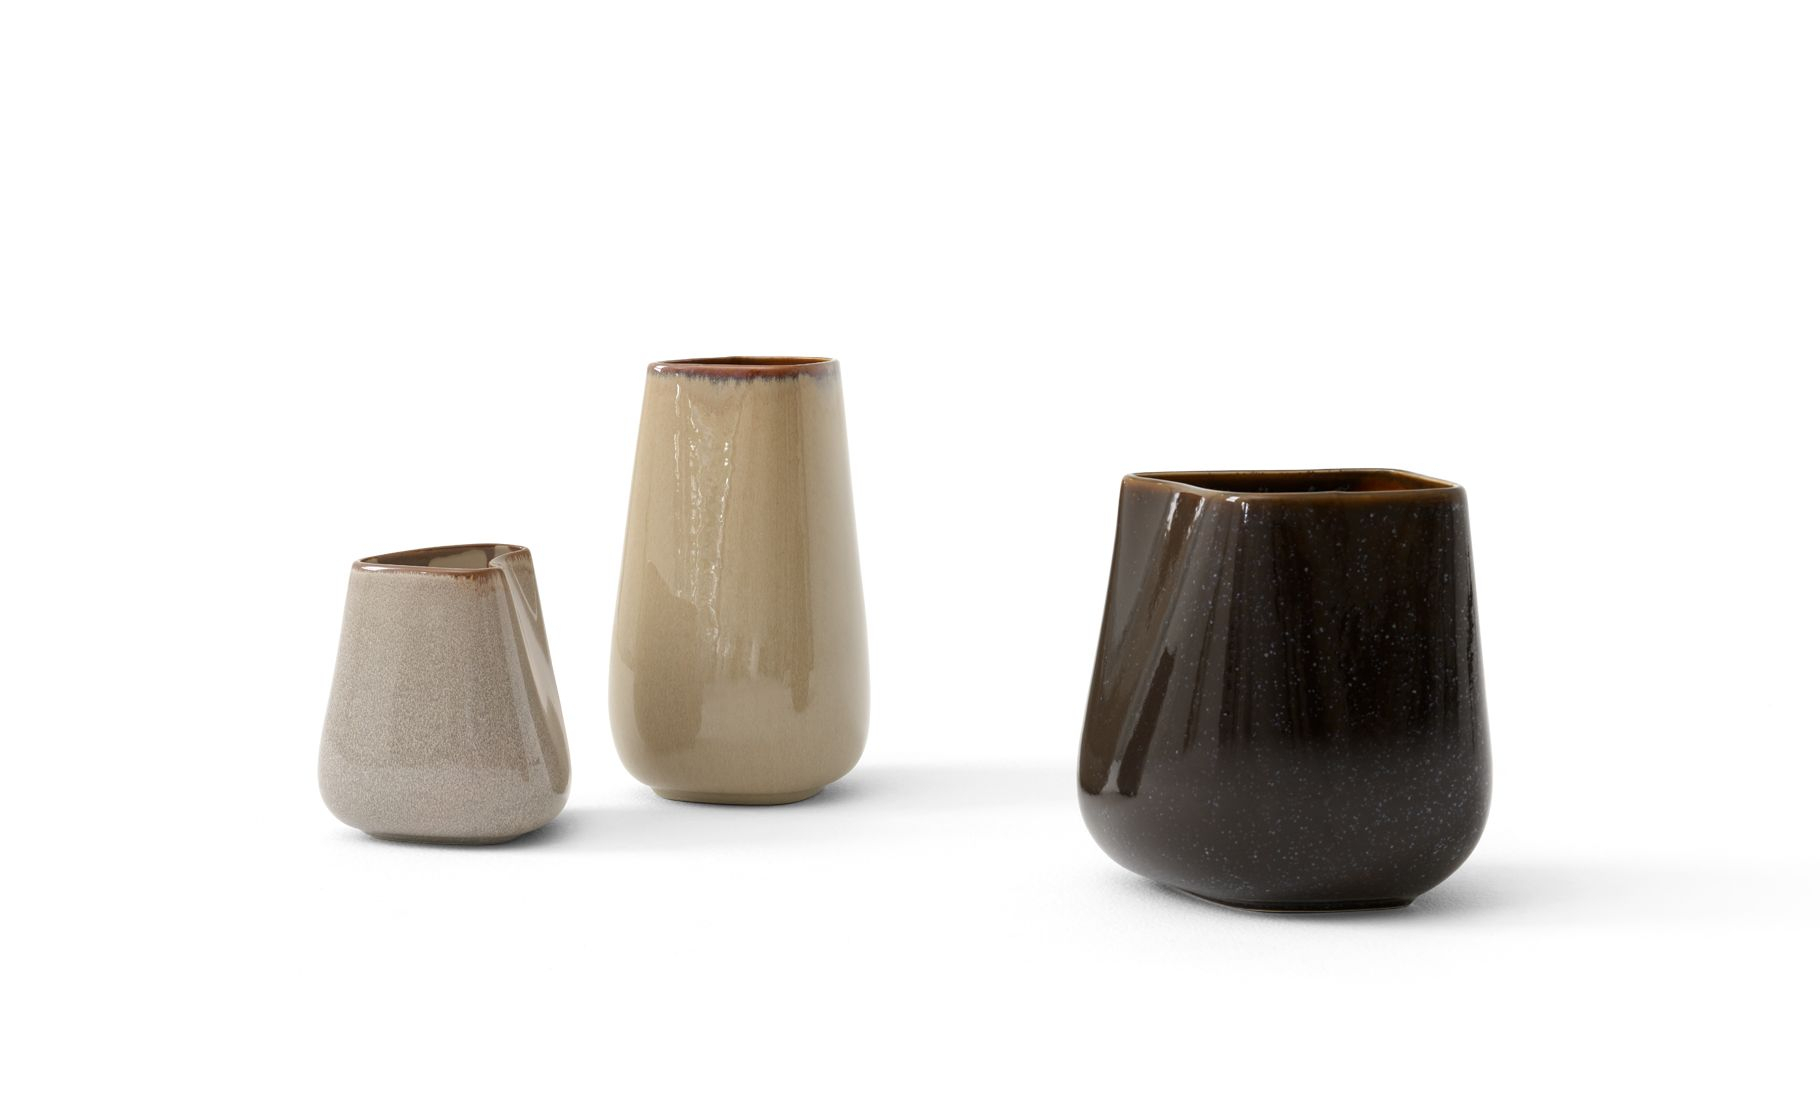 Collect Vase Sc68 Beige